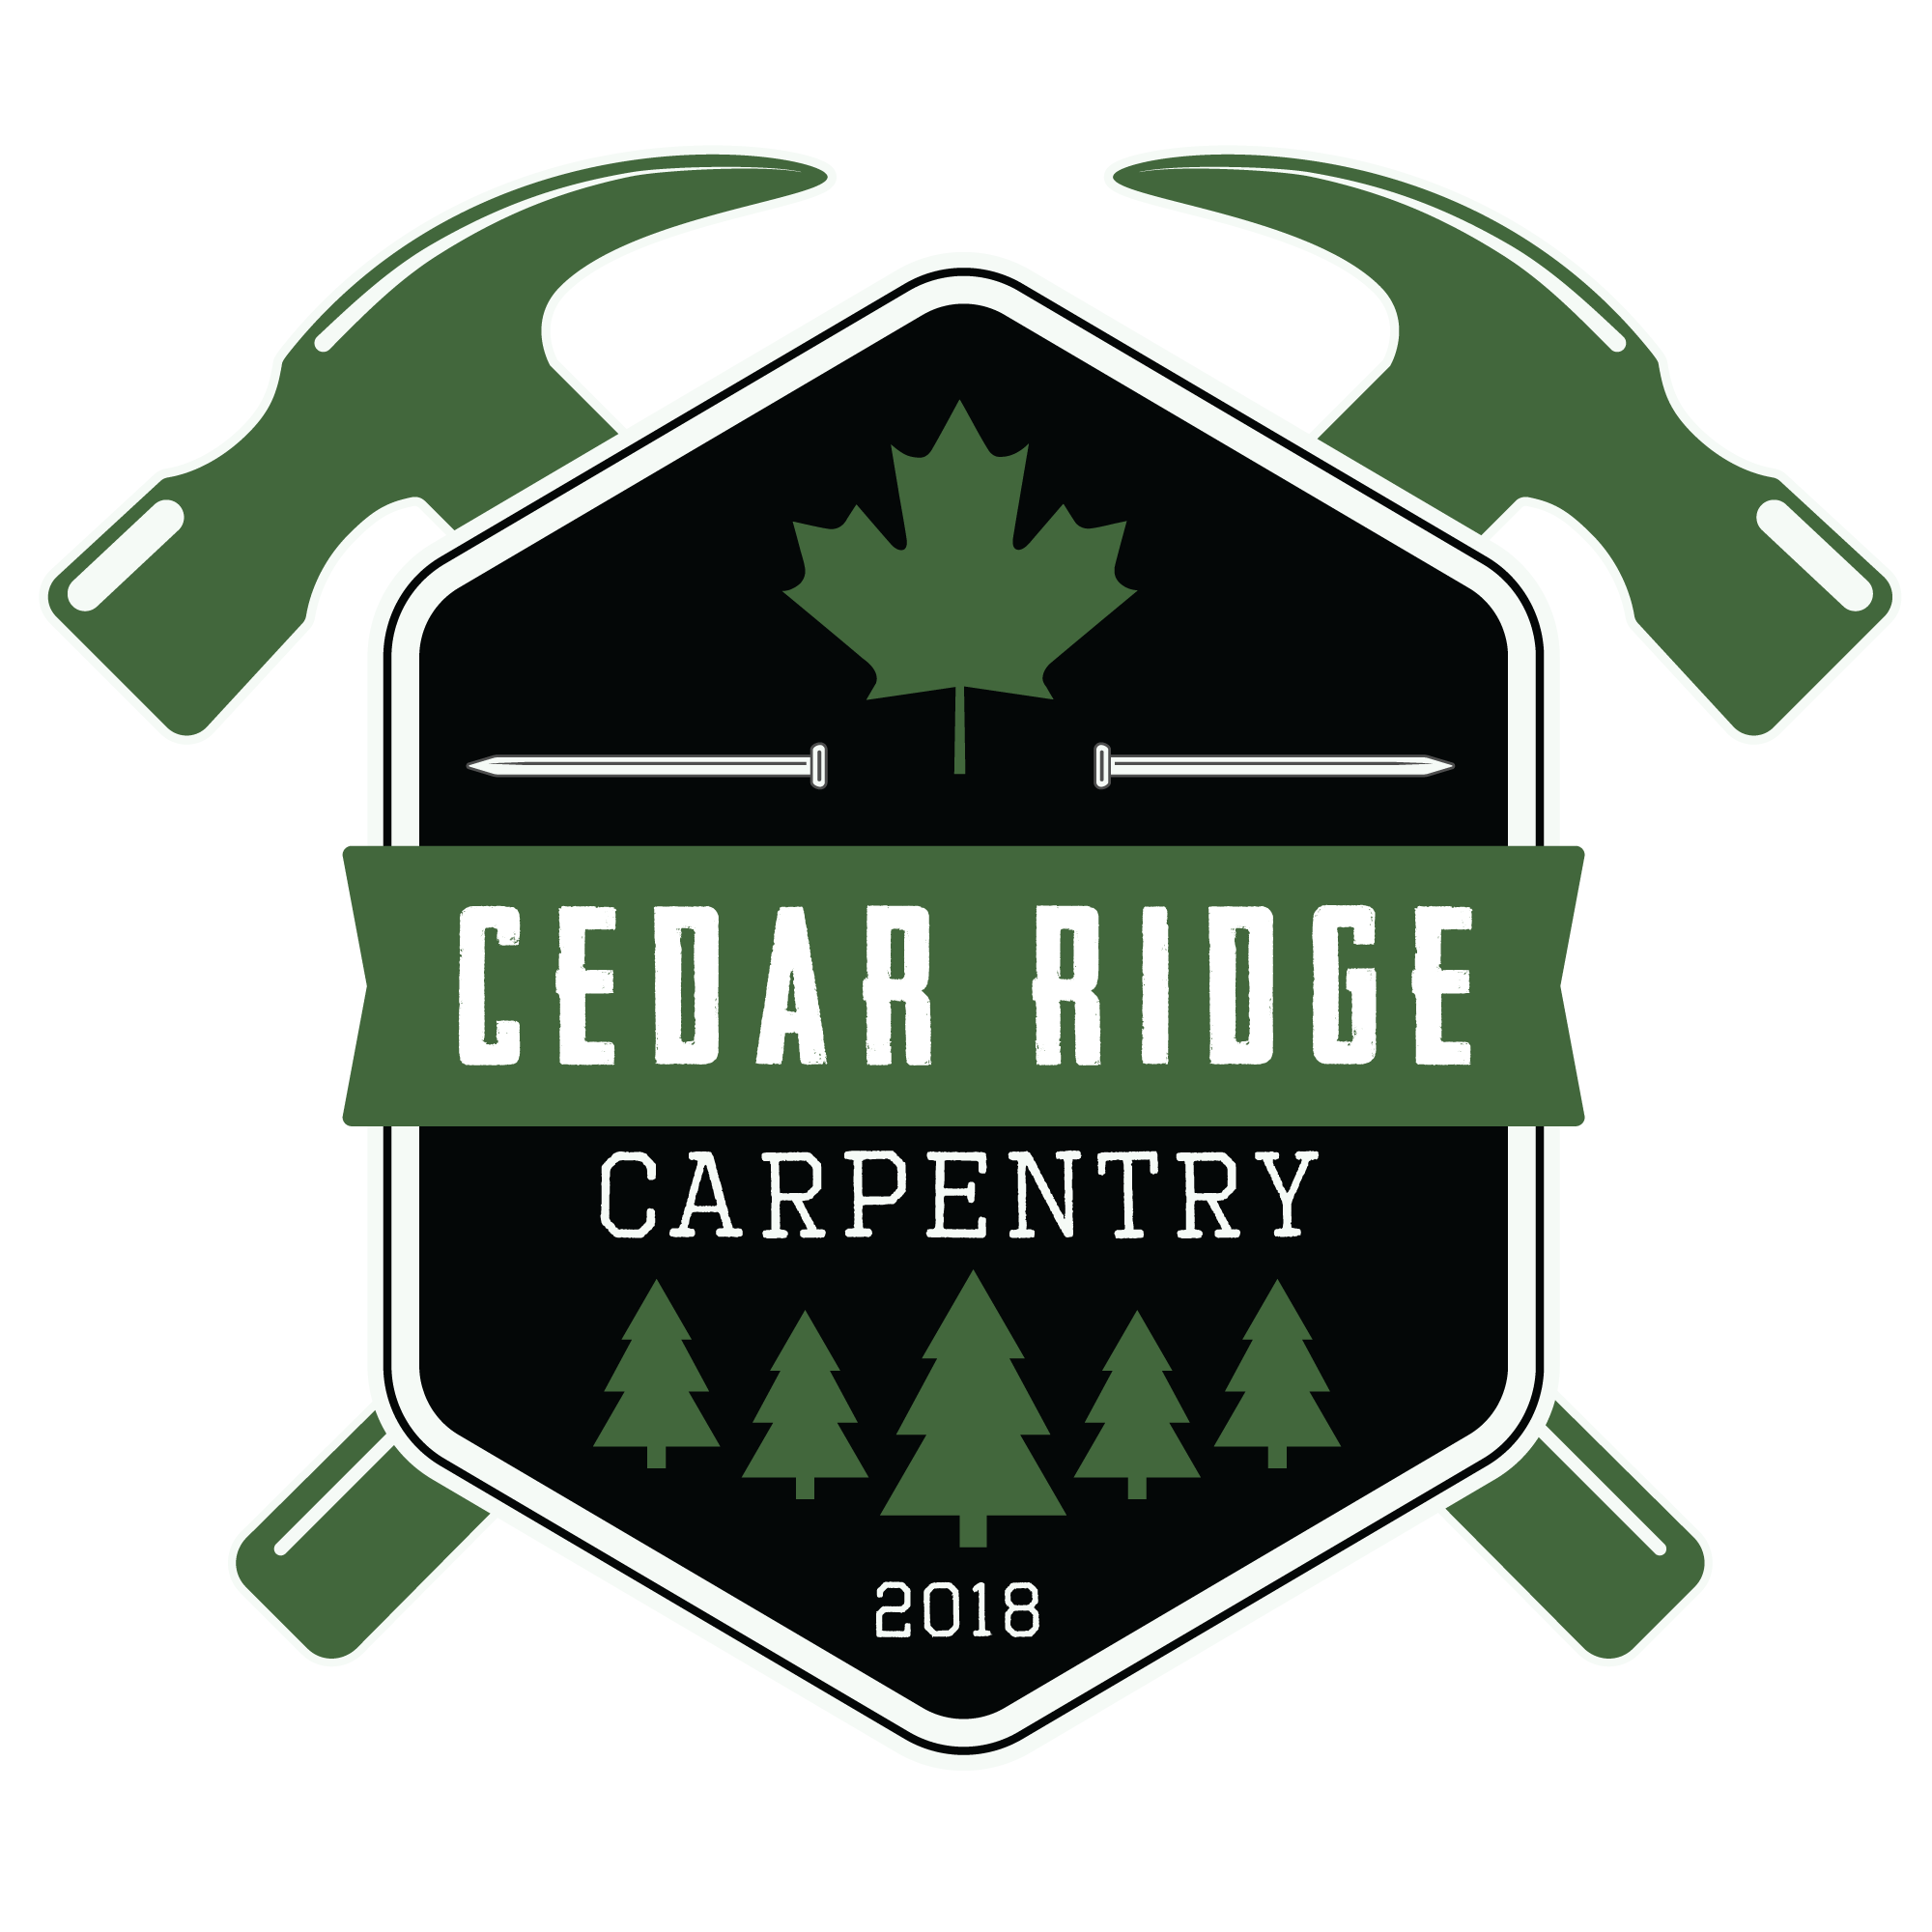 Cedar Ridge Carpentry